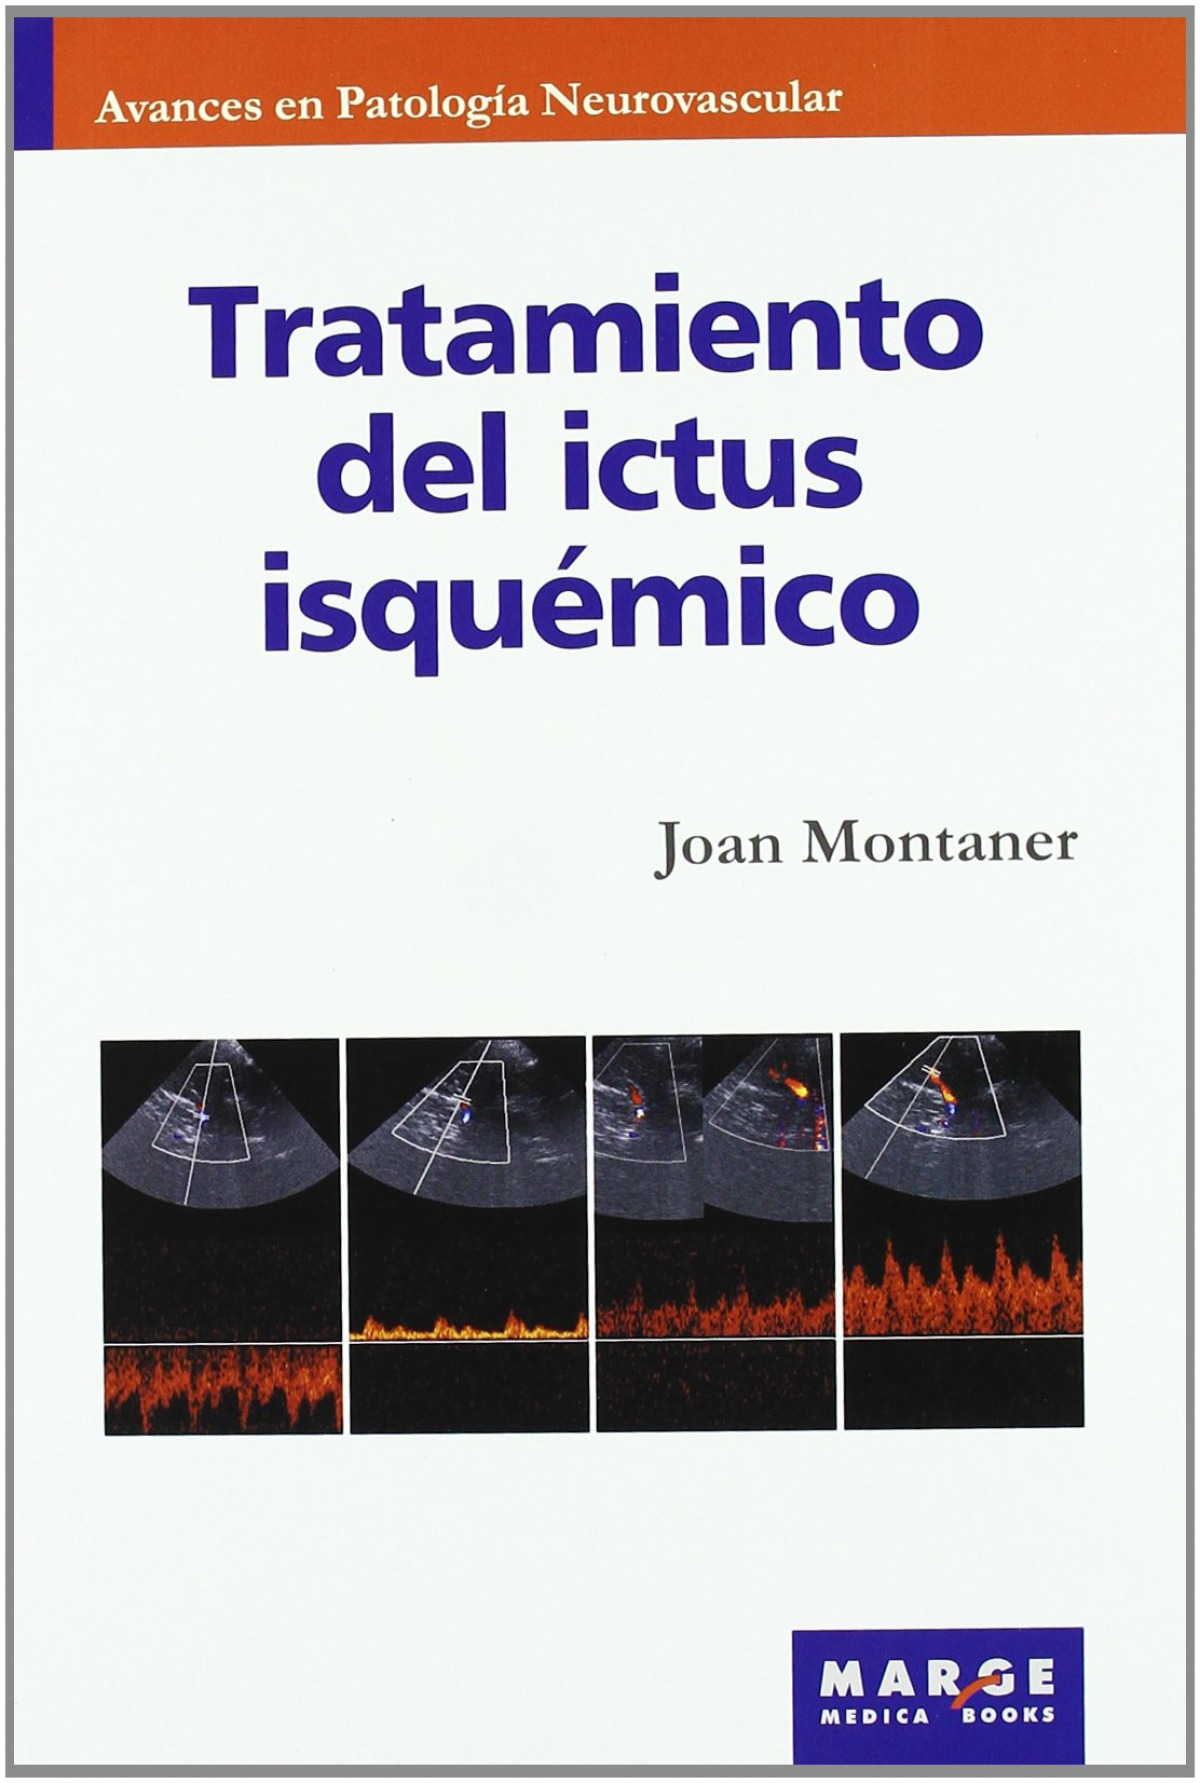 Tratamiento del ictus isquémico - Montaner, Joan